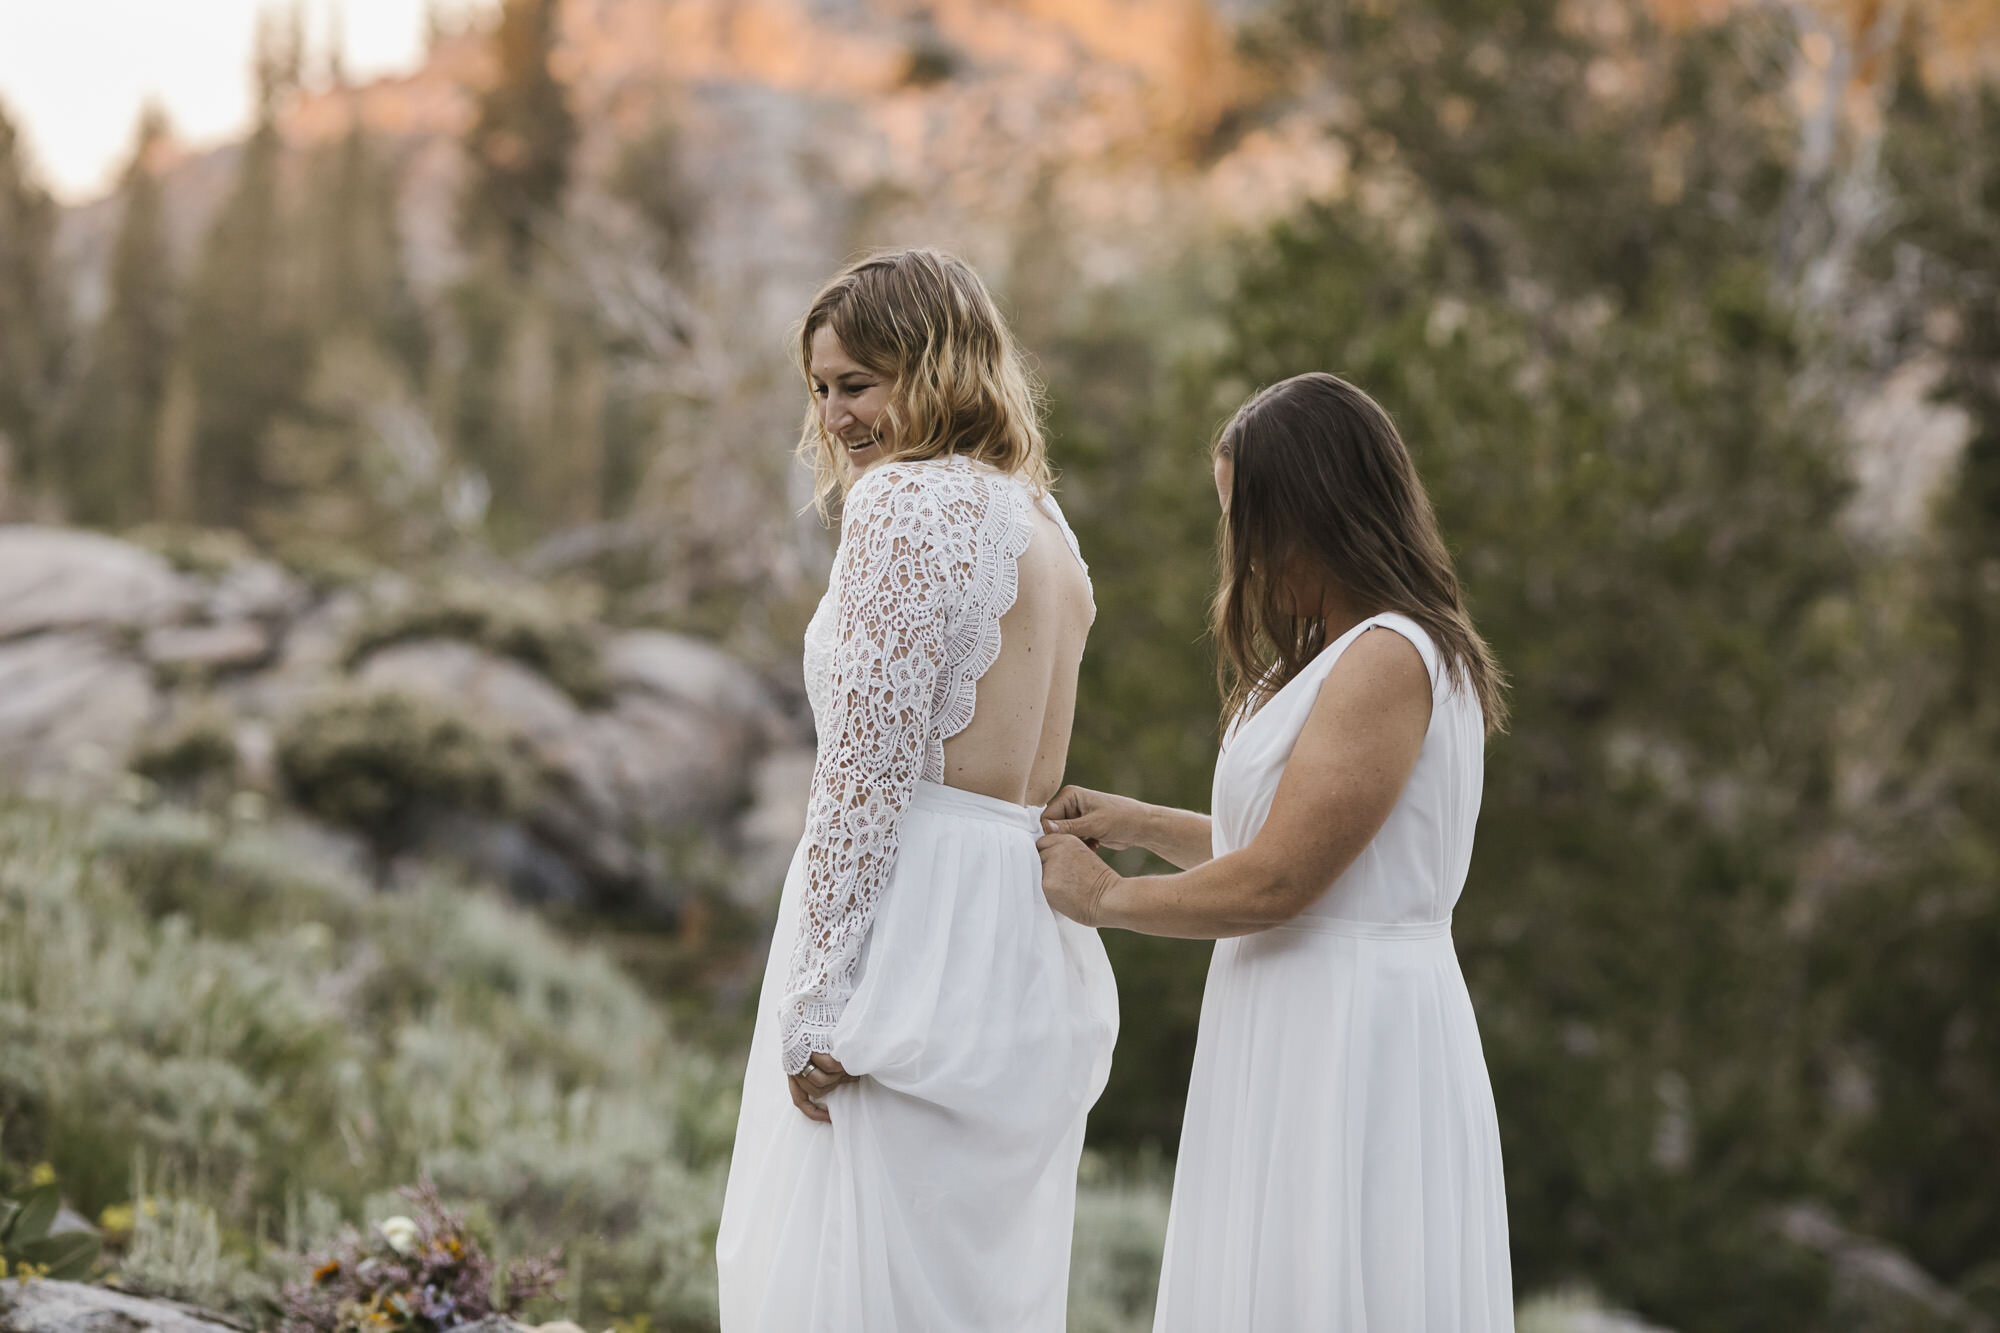 Bride helps her soon to be wife zip up her wedding dress during their adventurous hiking elopement